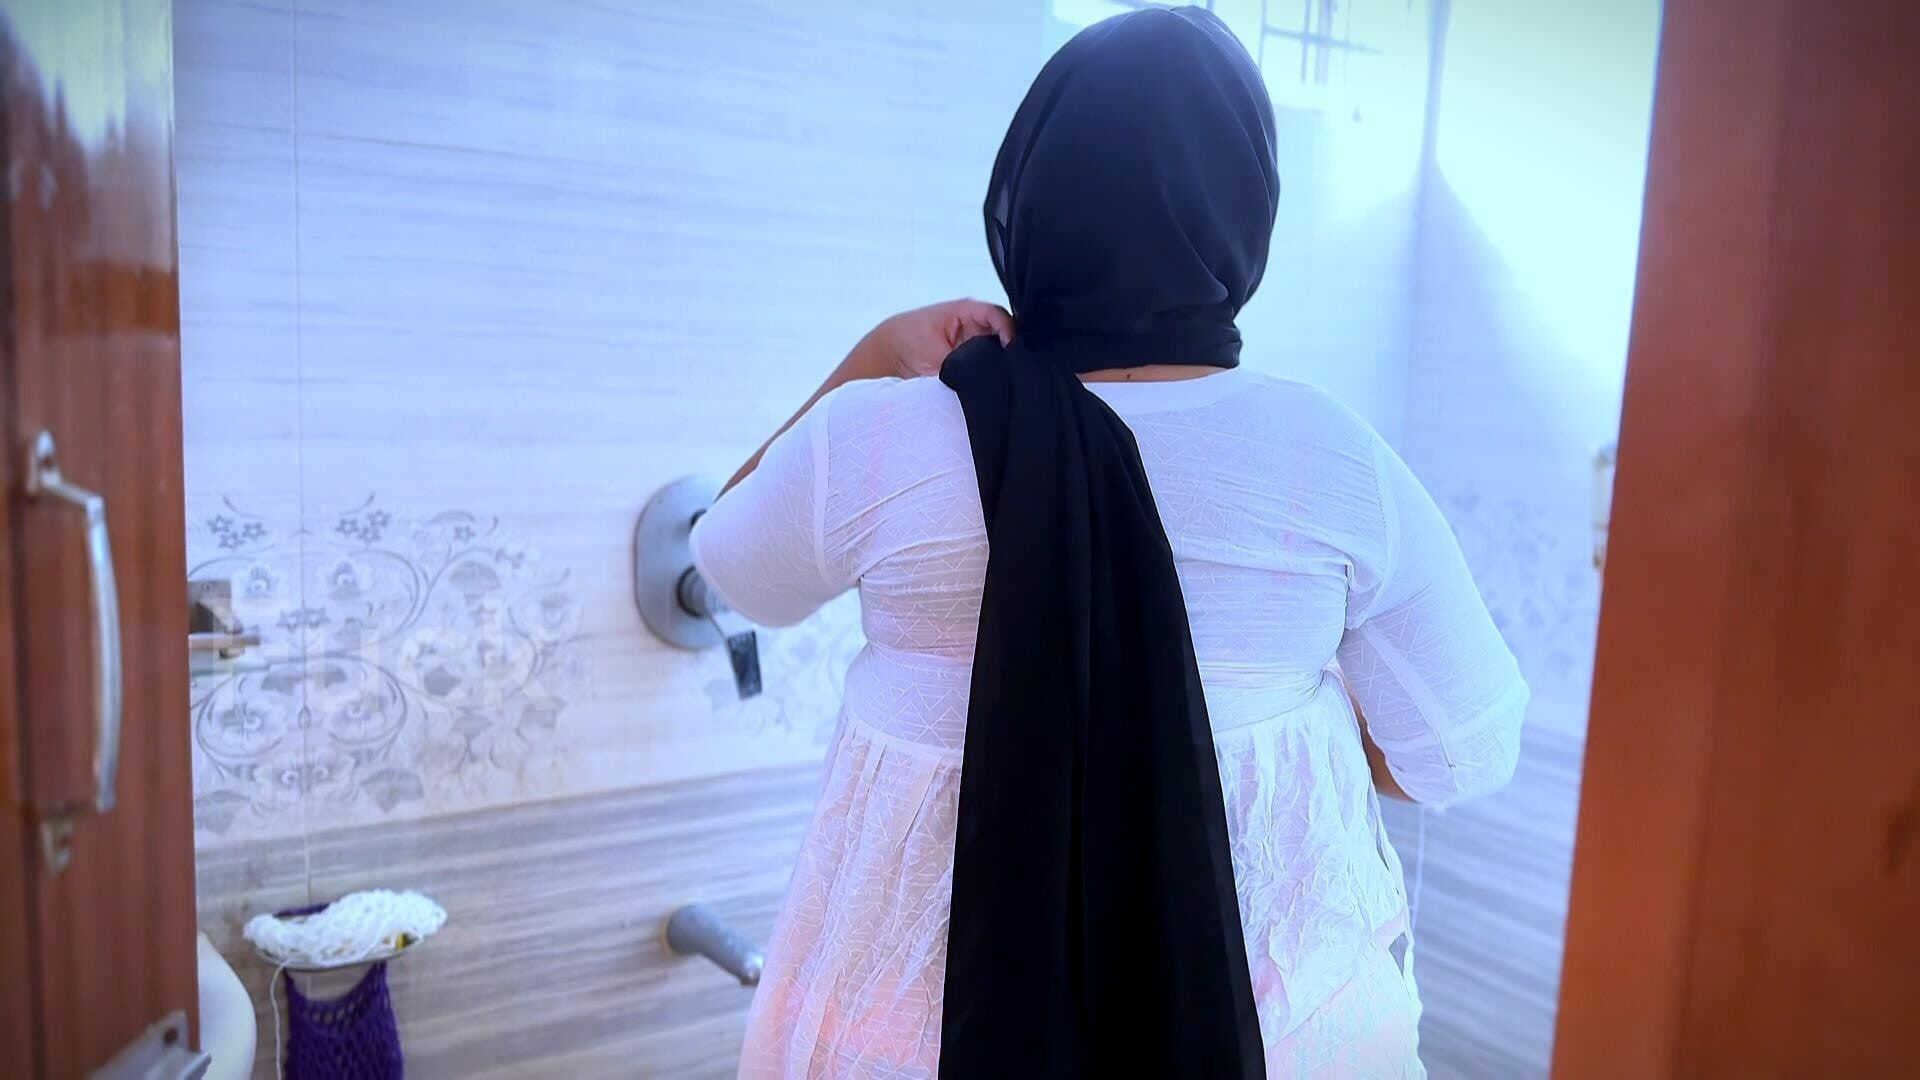 i fuck my Saudi Stepsister when she showring in bathroom